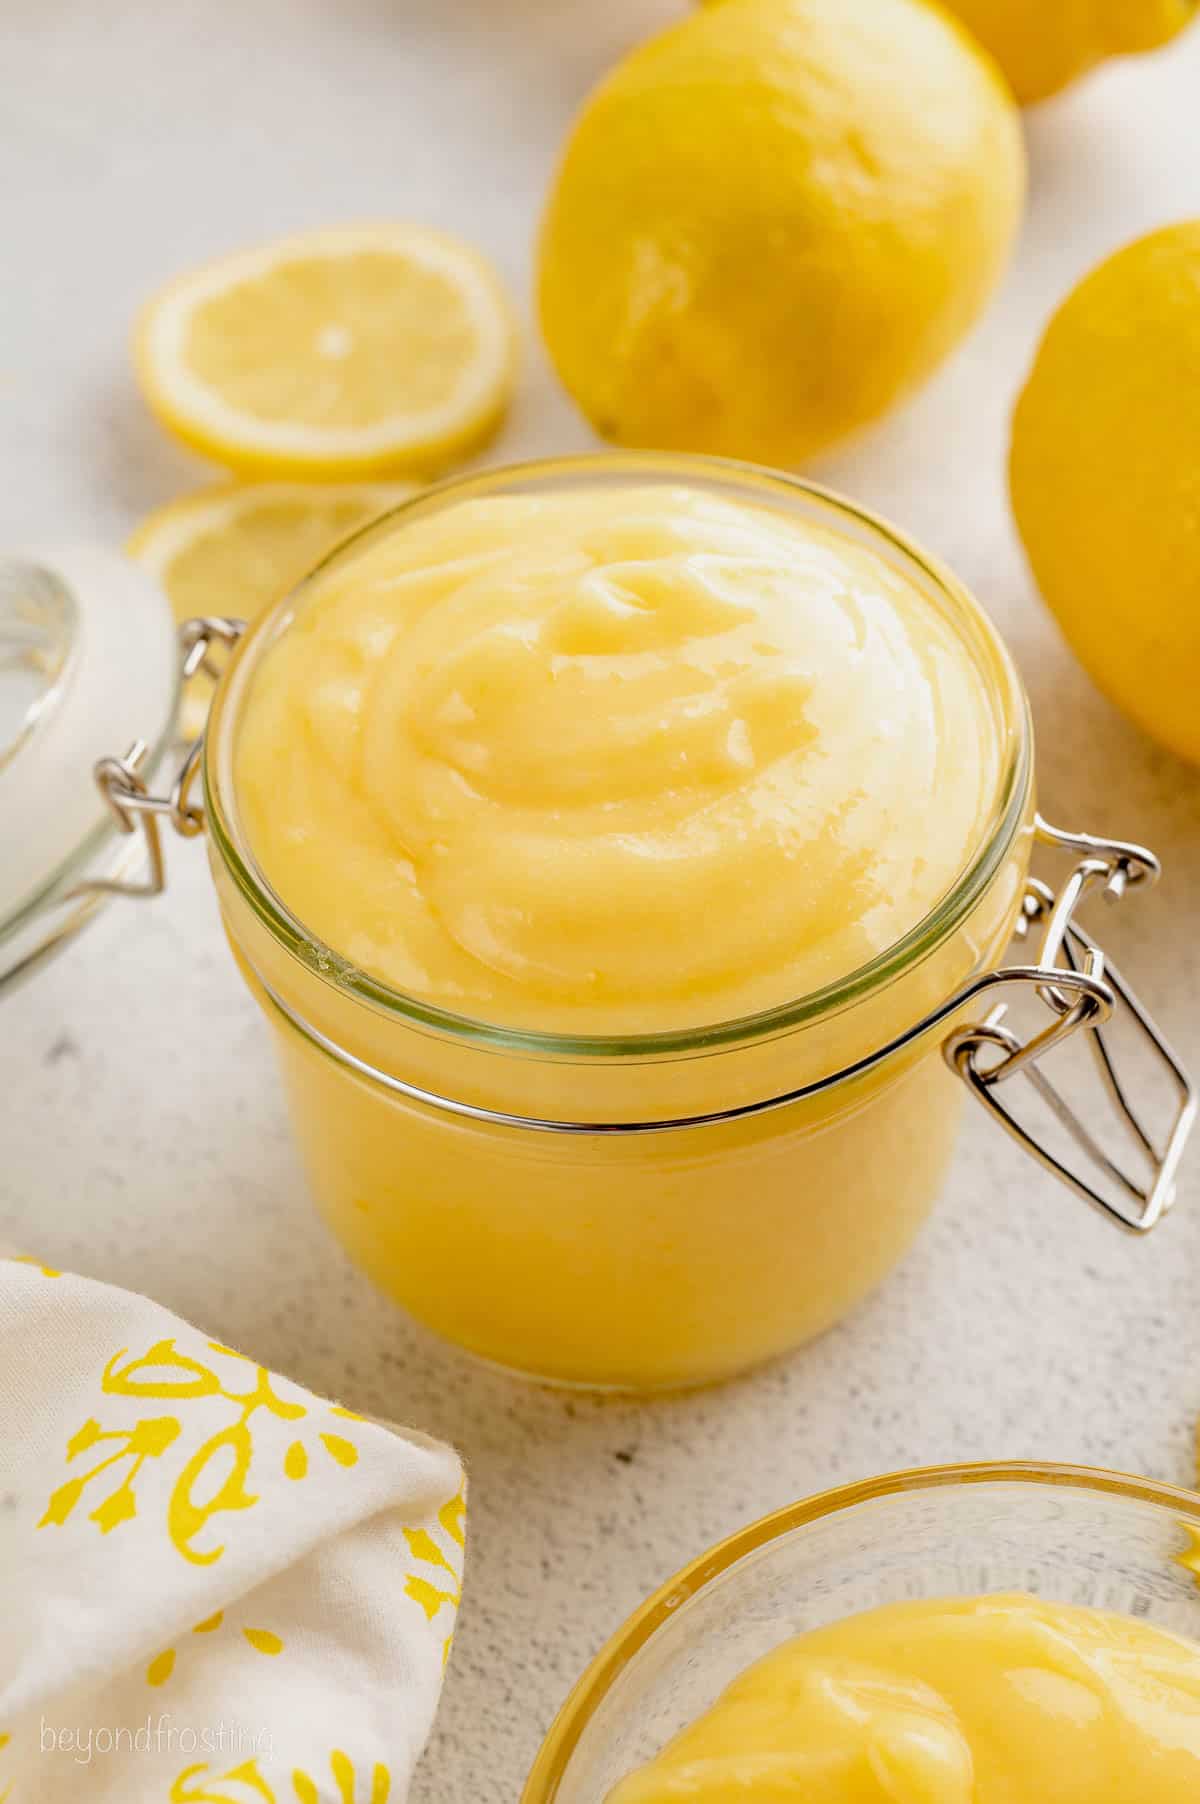 Homemade lemon curd in a glass jar surrounded by fresh lemons.